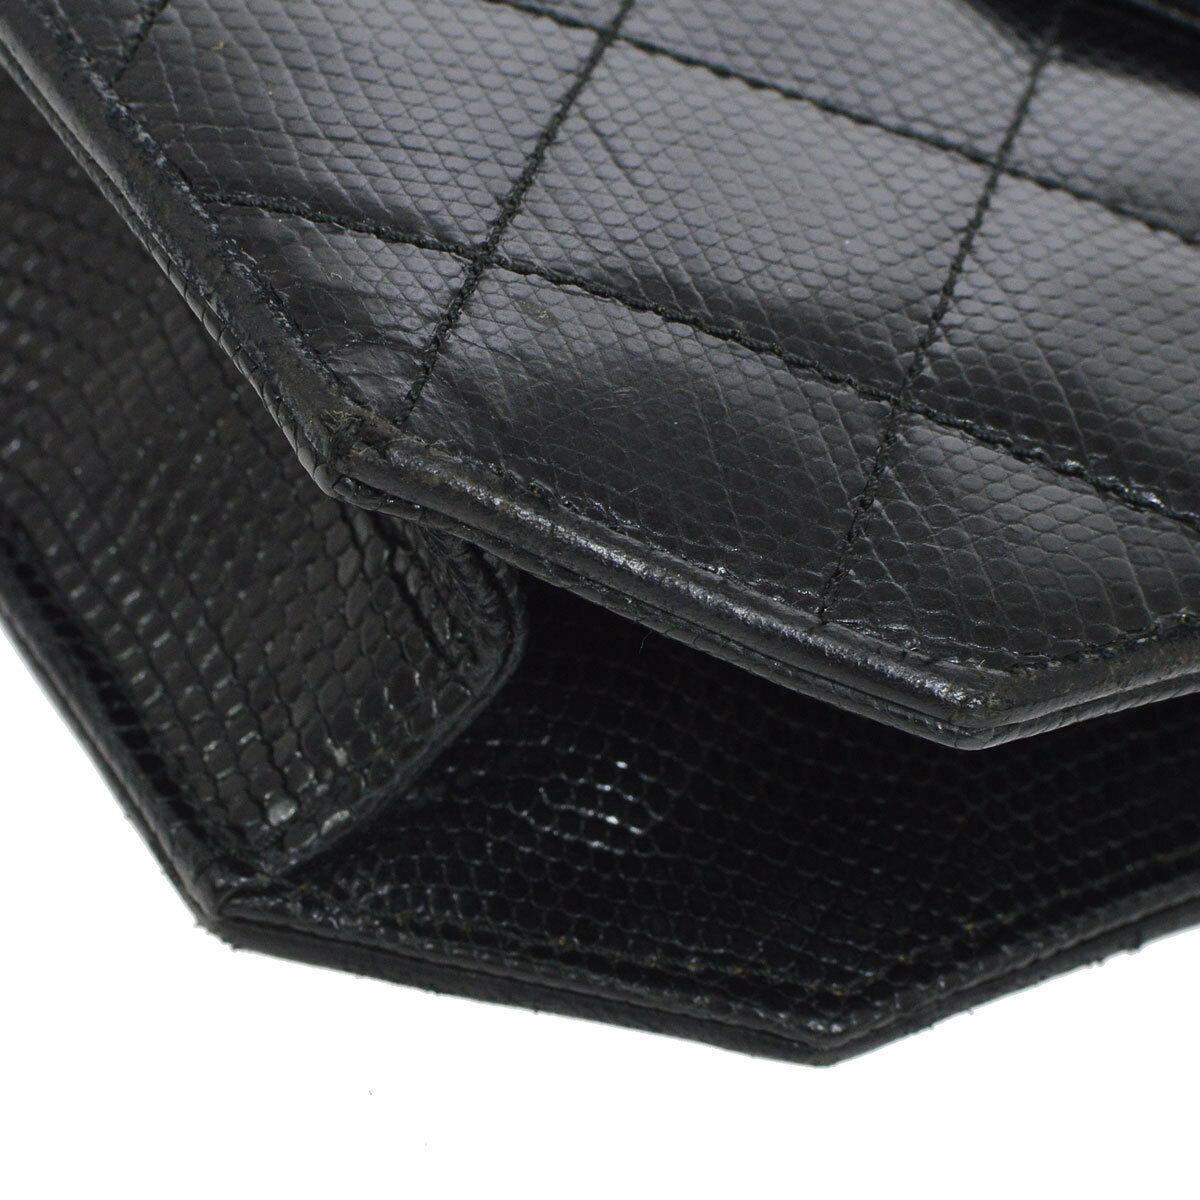 Chanel Black Lizard Exotic Skin Leather Small Evening Clutch Shoulder Flap Bag Damen